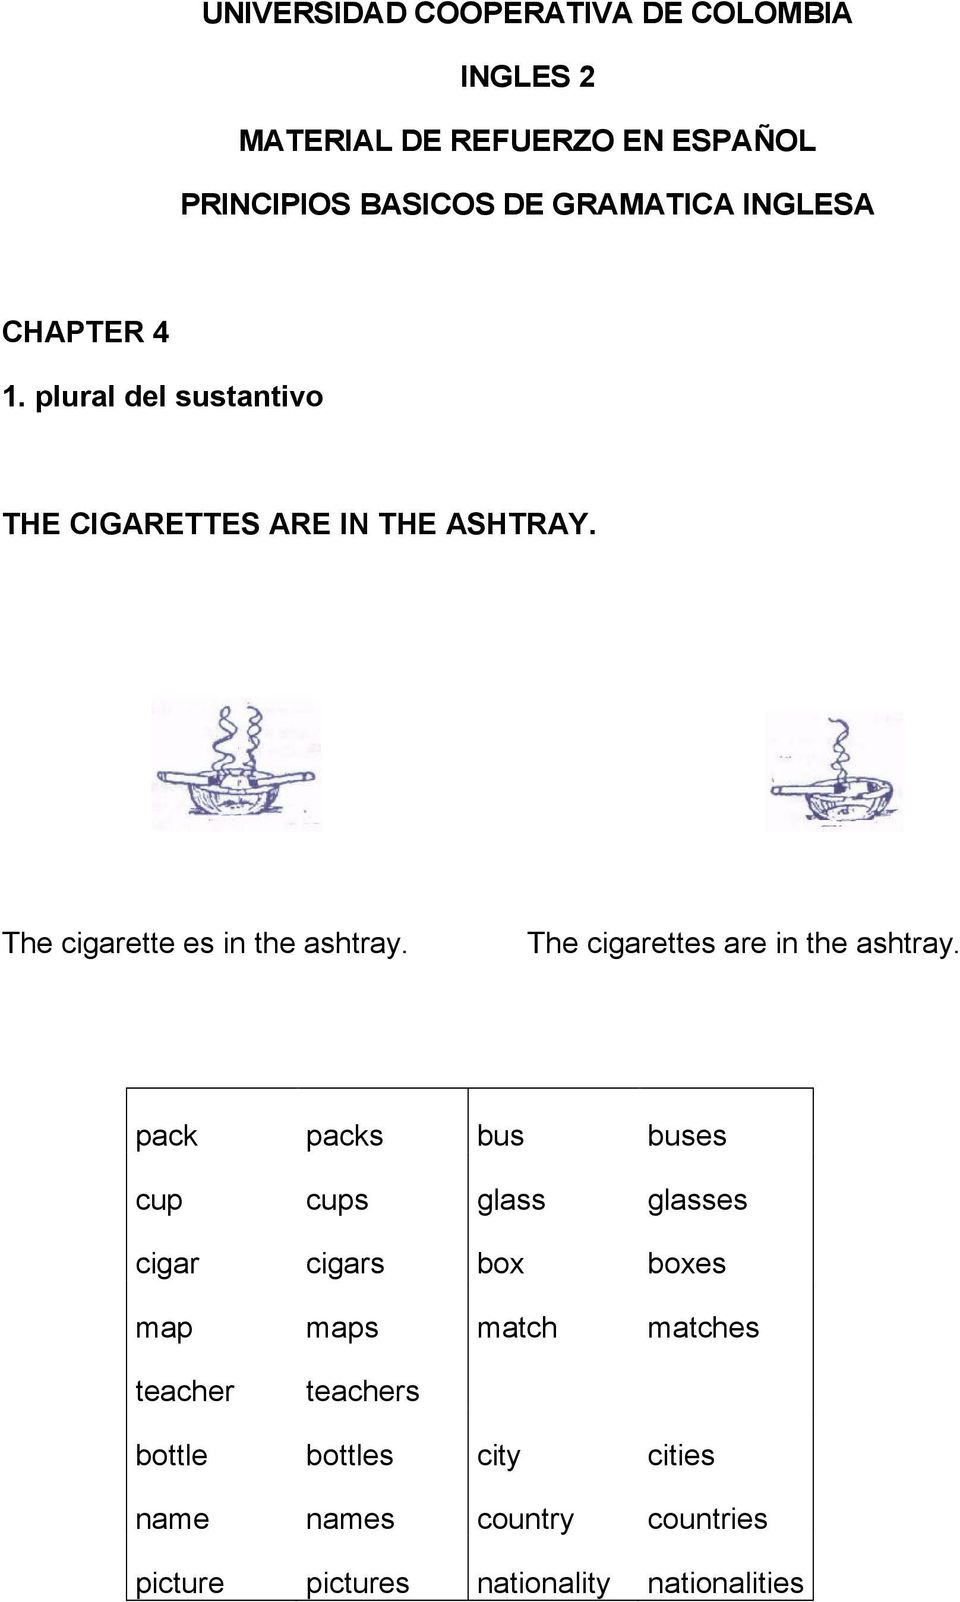 The cigarettes are in the ashtray.